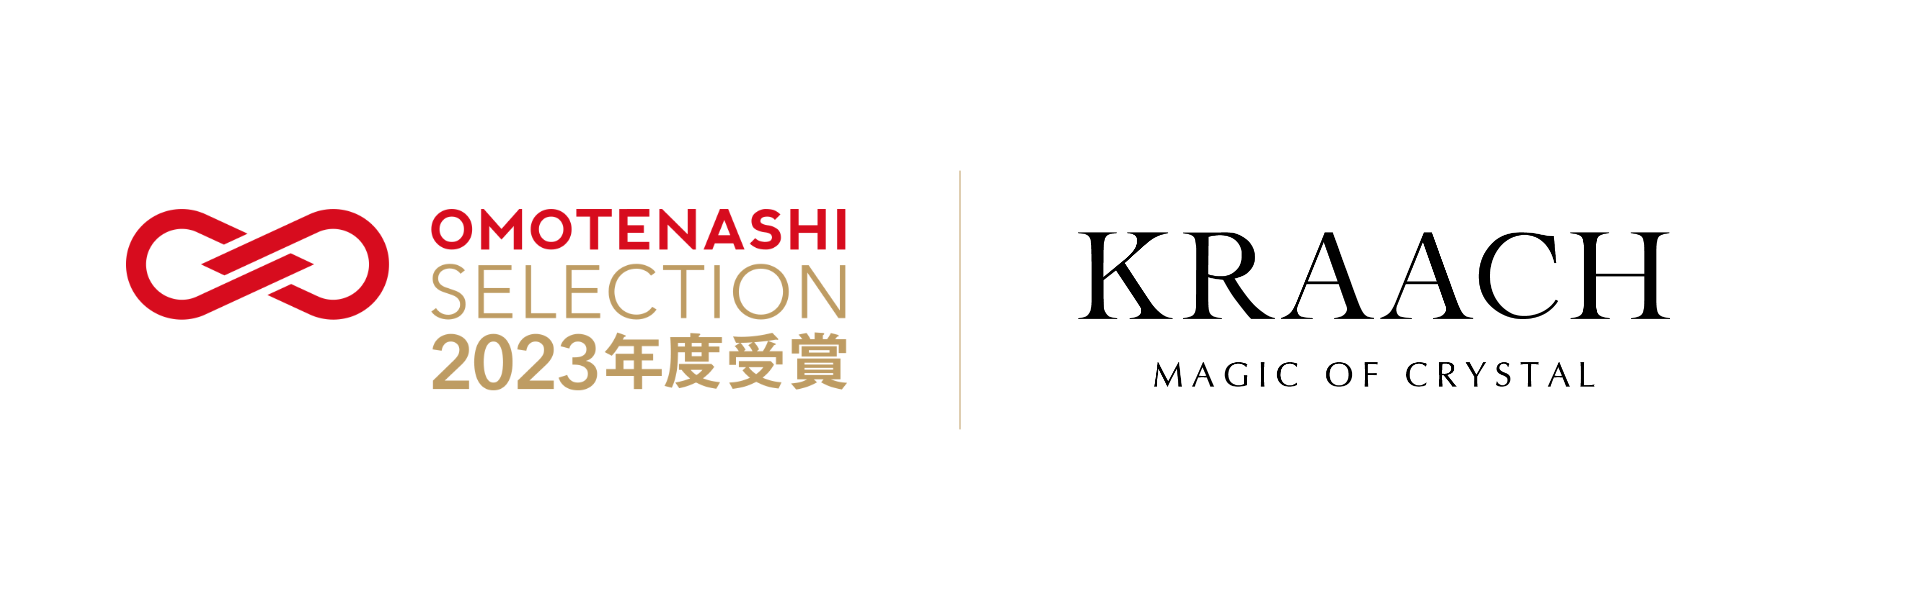 KRAACH クリスタルバスソルト OMOTENASHI Selection 受賞